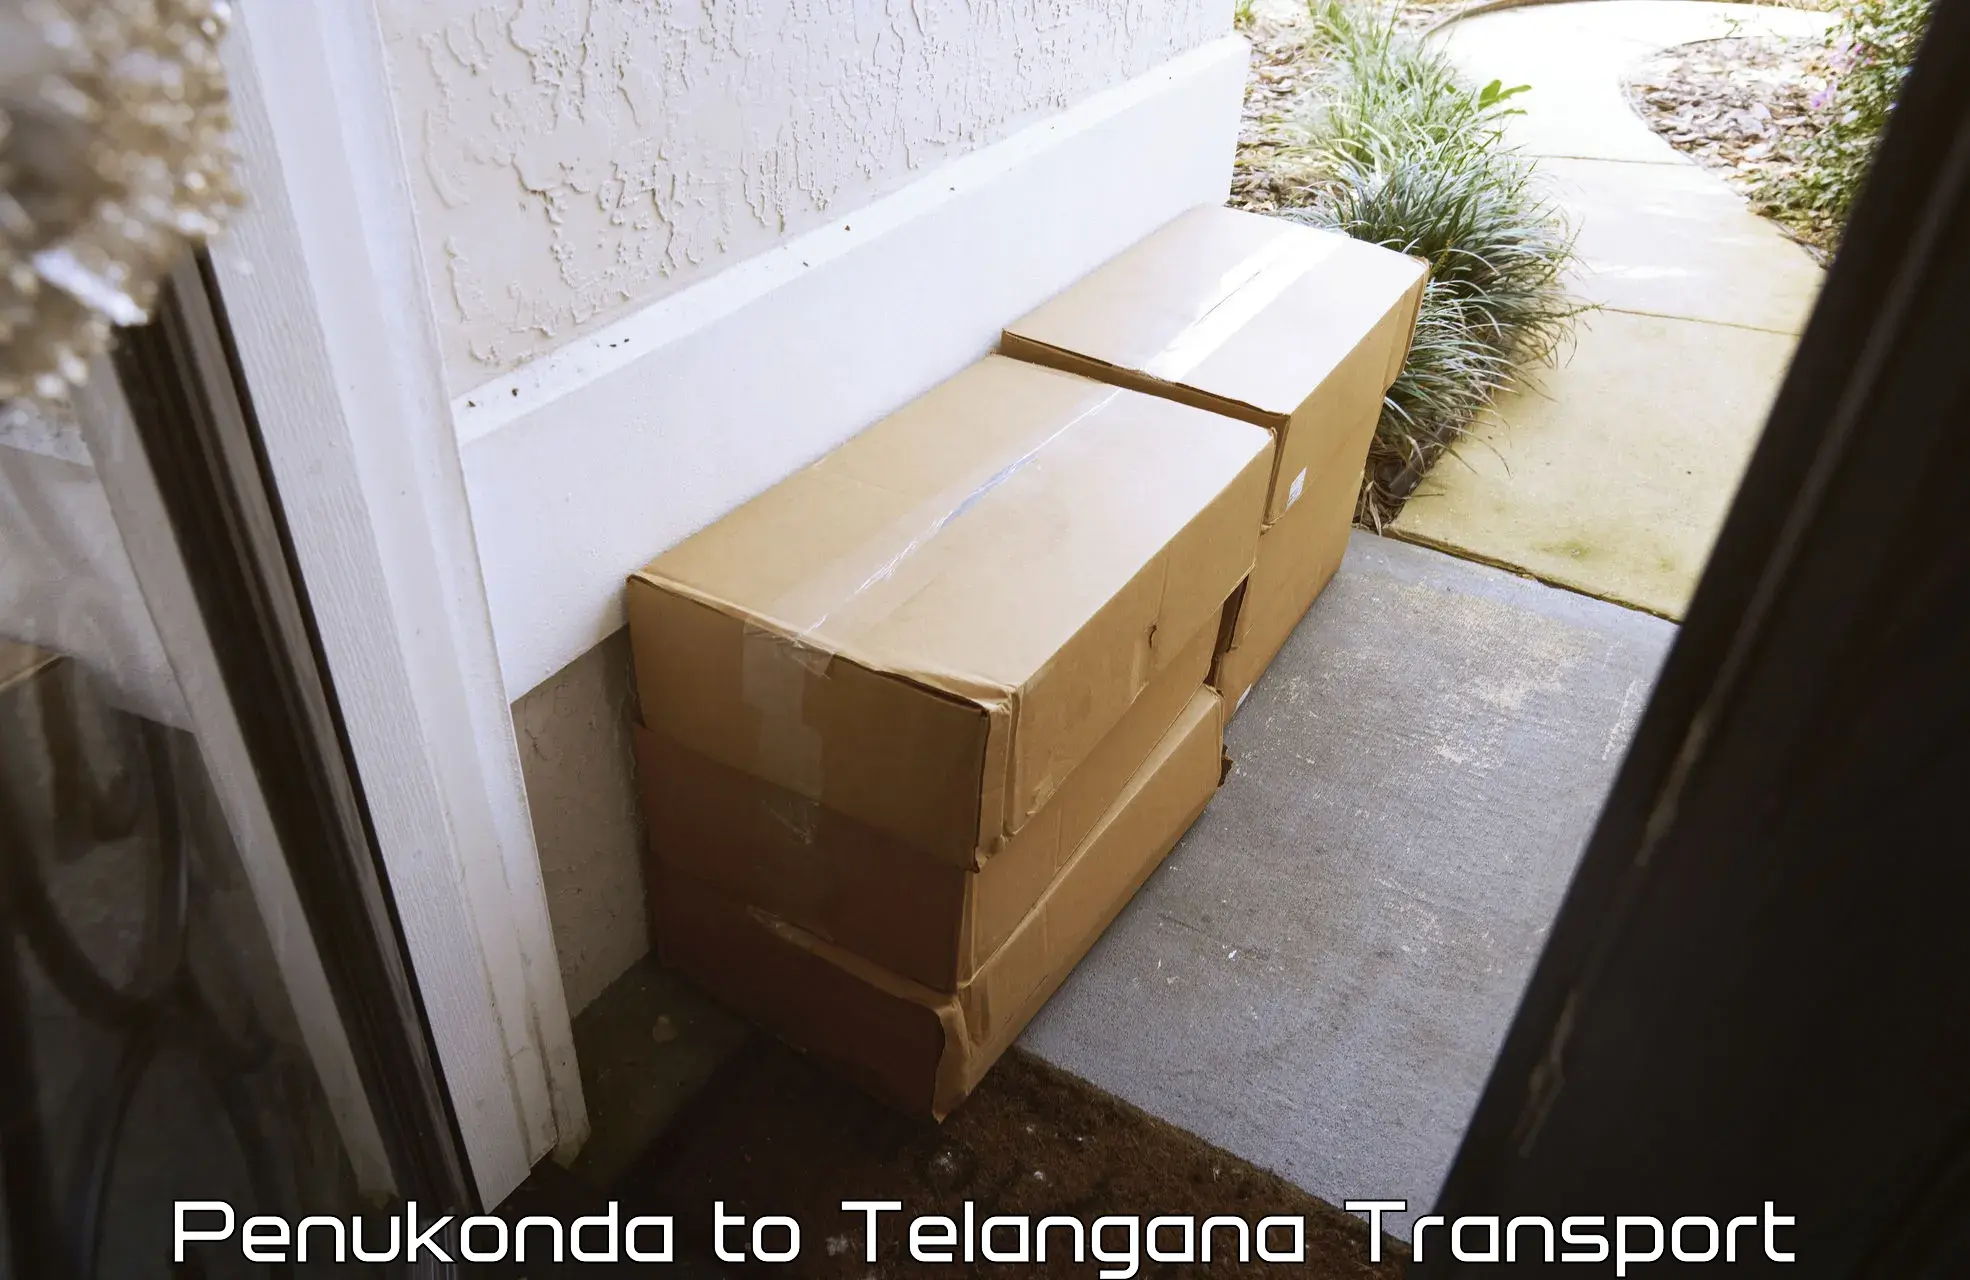 Shipping partner Penukonda to Vikarabad